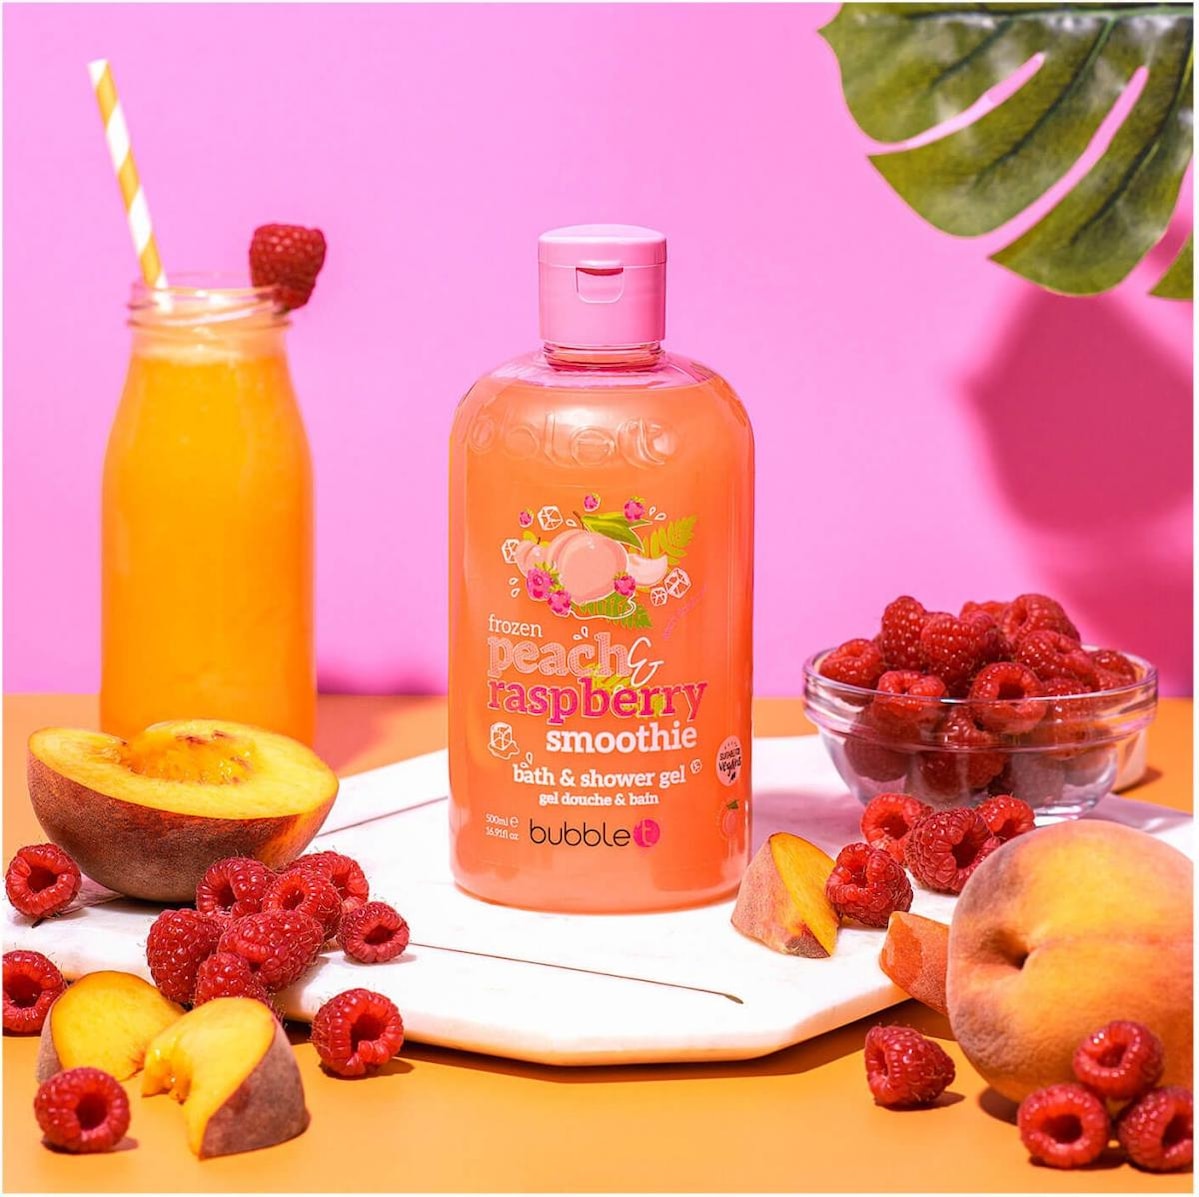 BUBBLE T Bath & Shower Gel (500ml) Peach & Raspberry